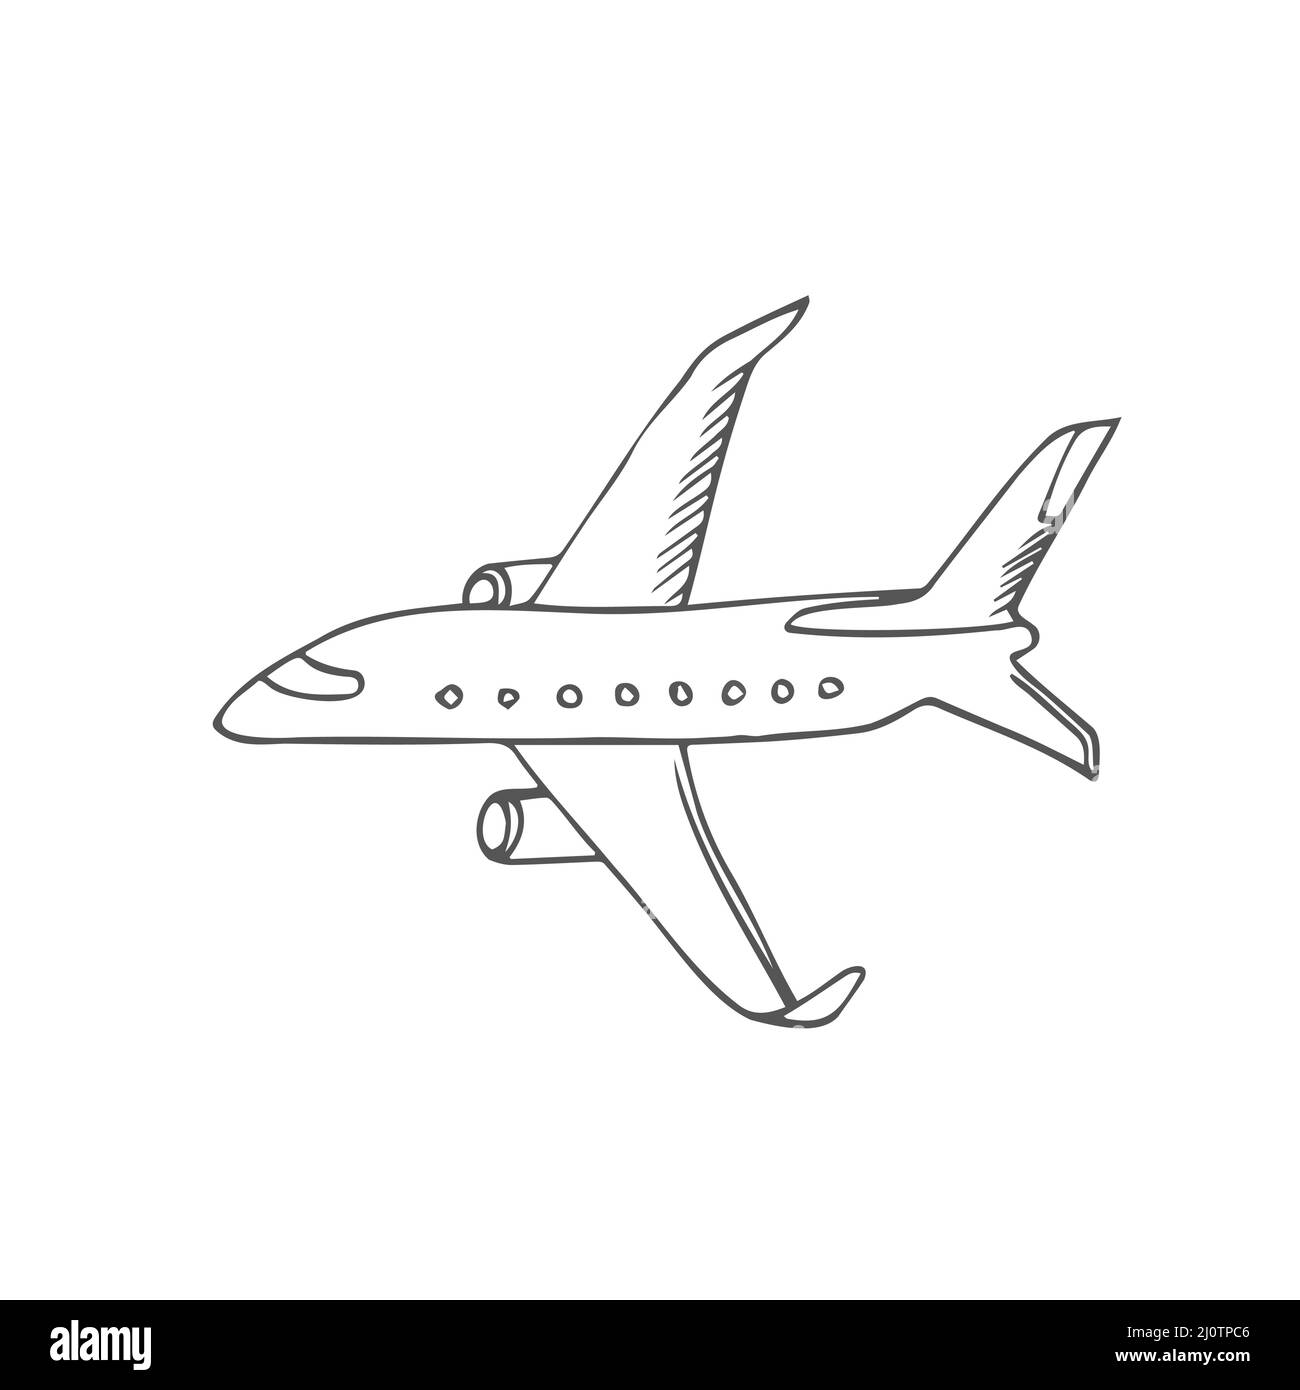 doodle air planeillustration. vector line plain isolated Stock Vector